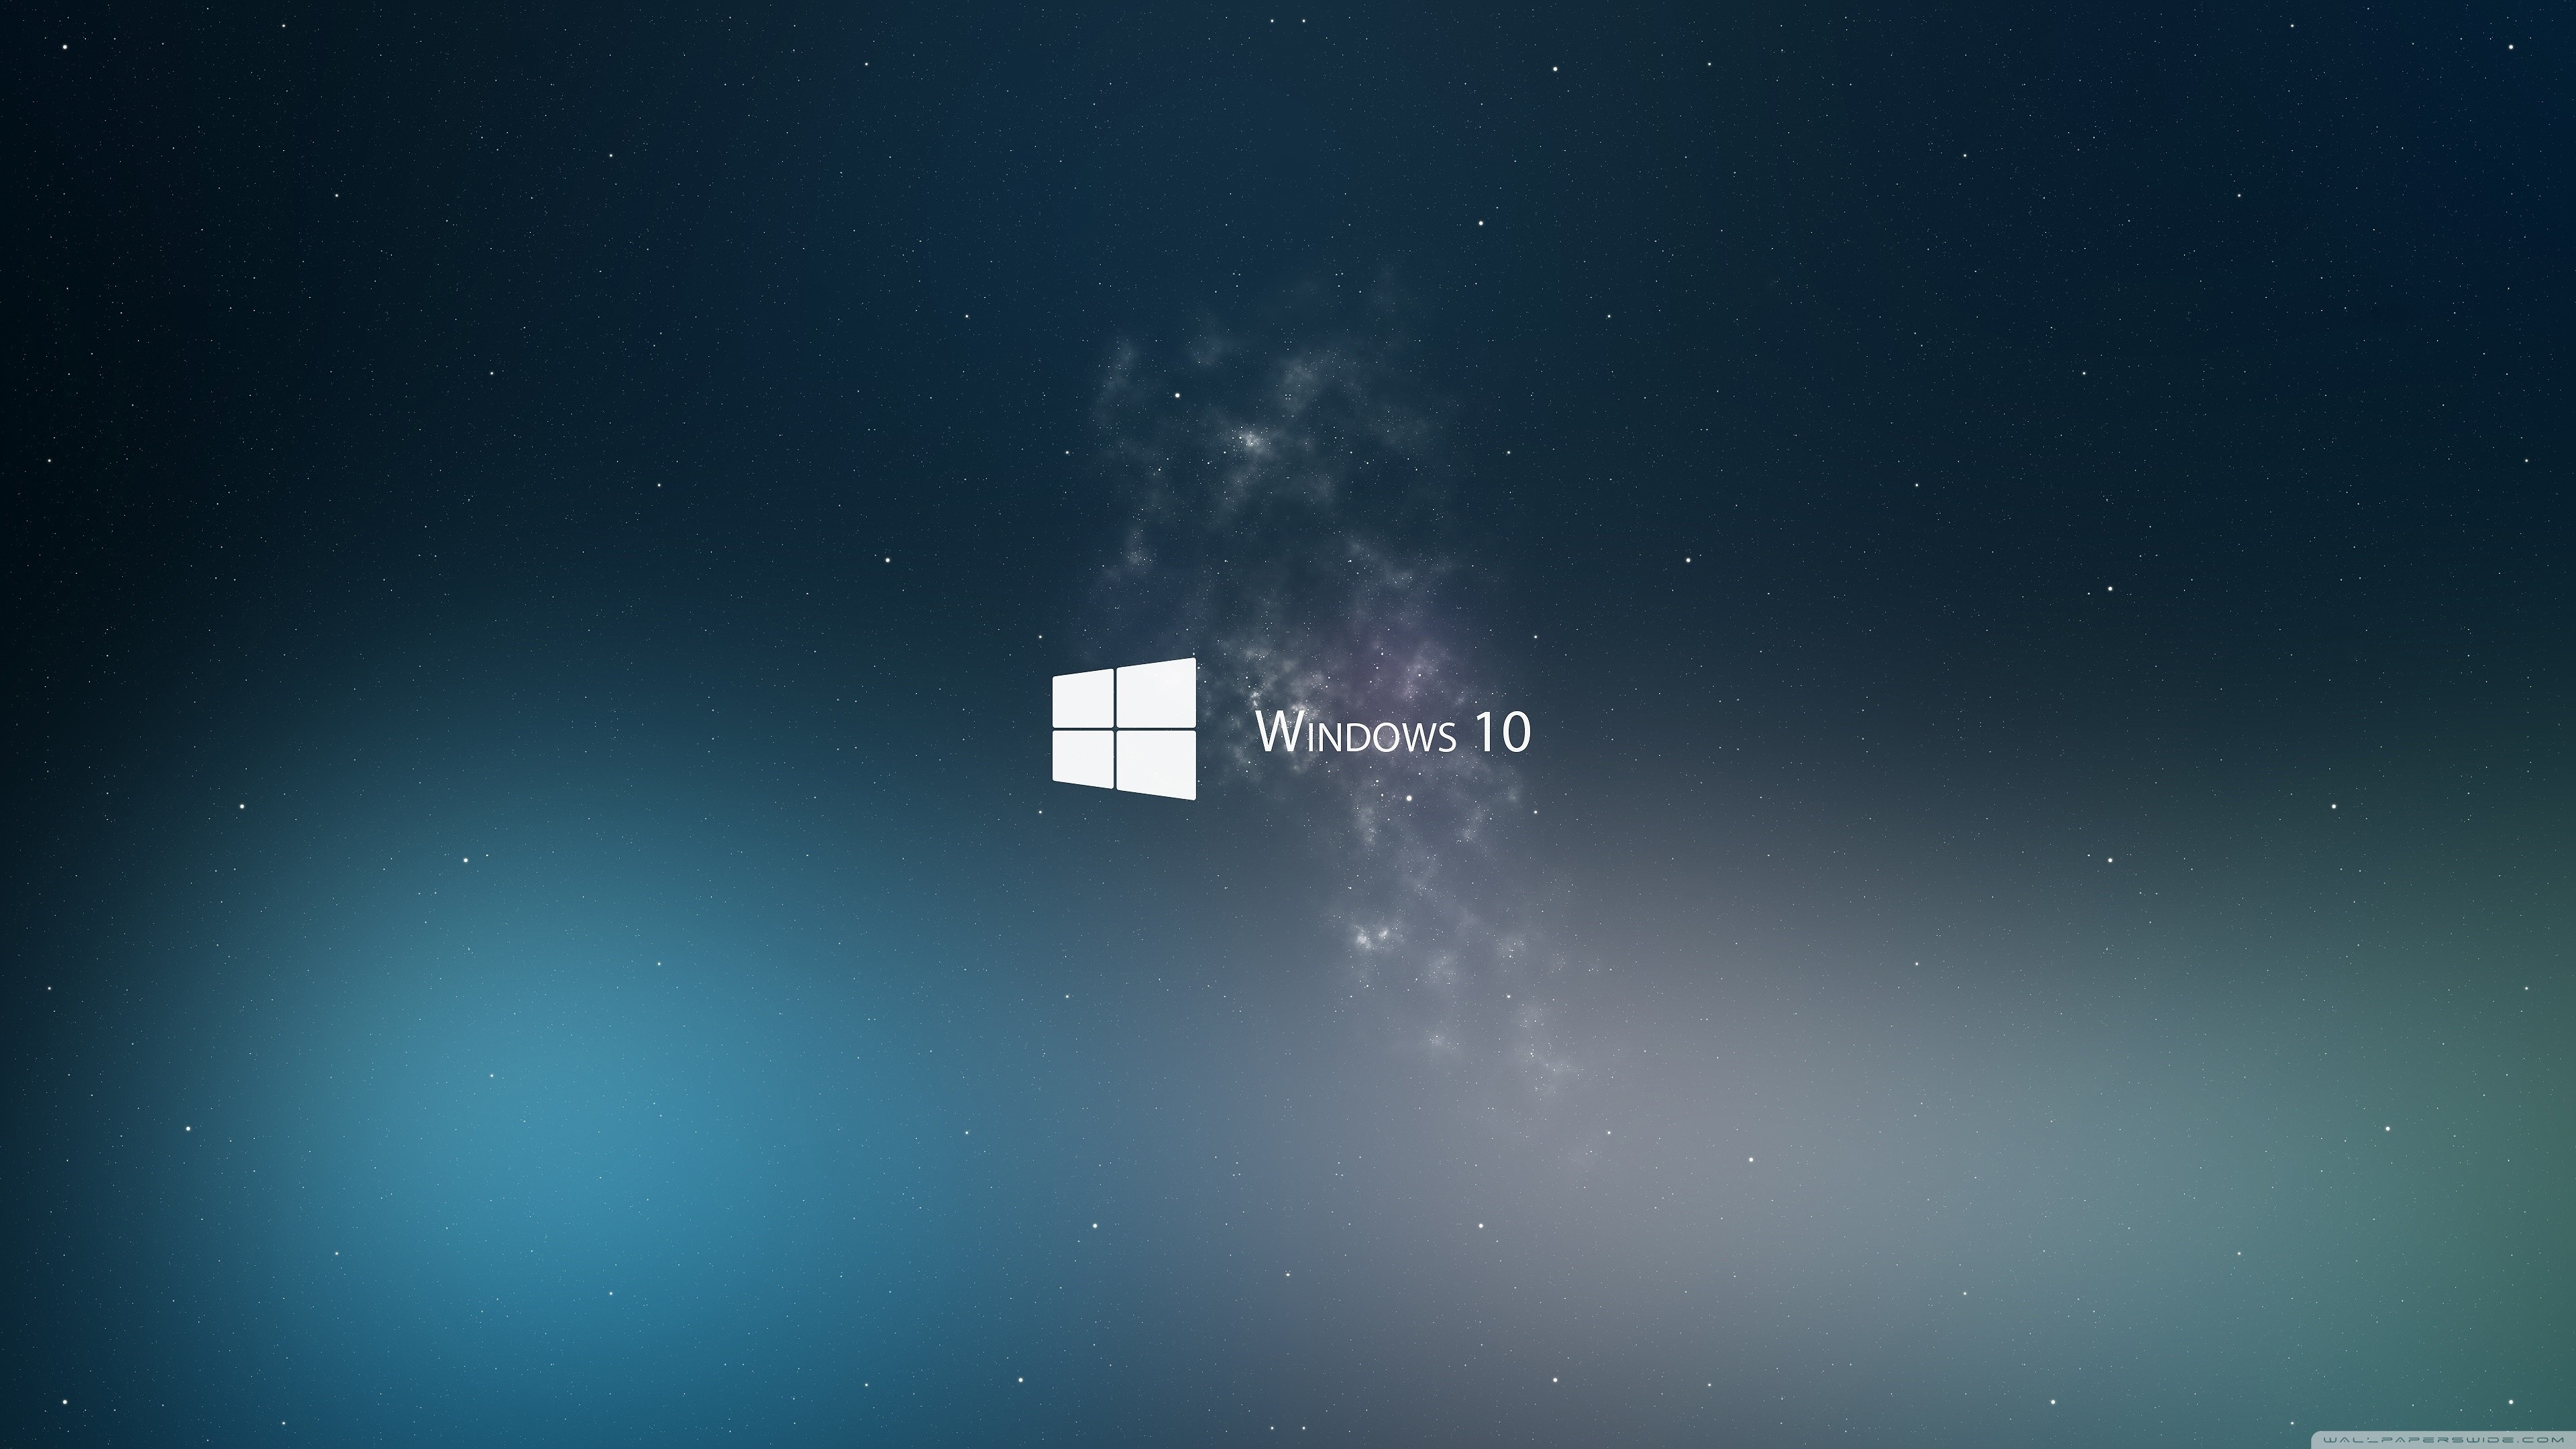 3840x2160 CHANGE YOUR DESKTOP BACKGROUND IN WINDOWS 10 | CHANGE YOUR DESKTOP  BACKGROUND IN WINDOWS 10 | Pinterest | Windows 10 and Desktop backgrounds